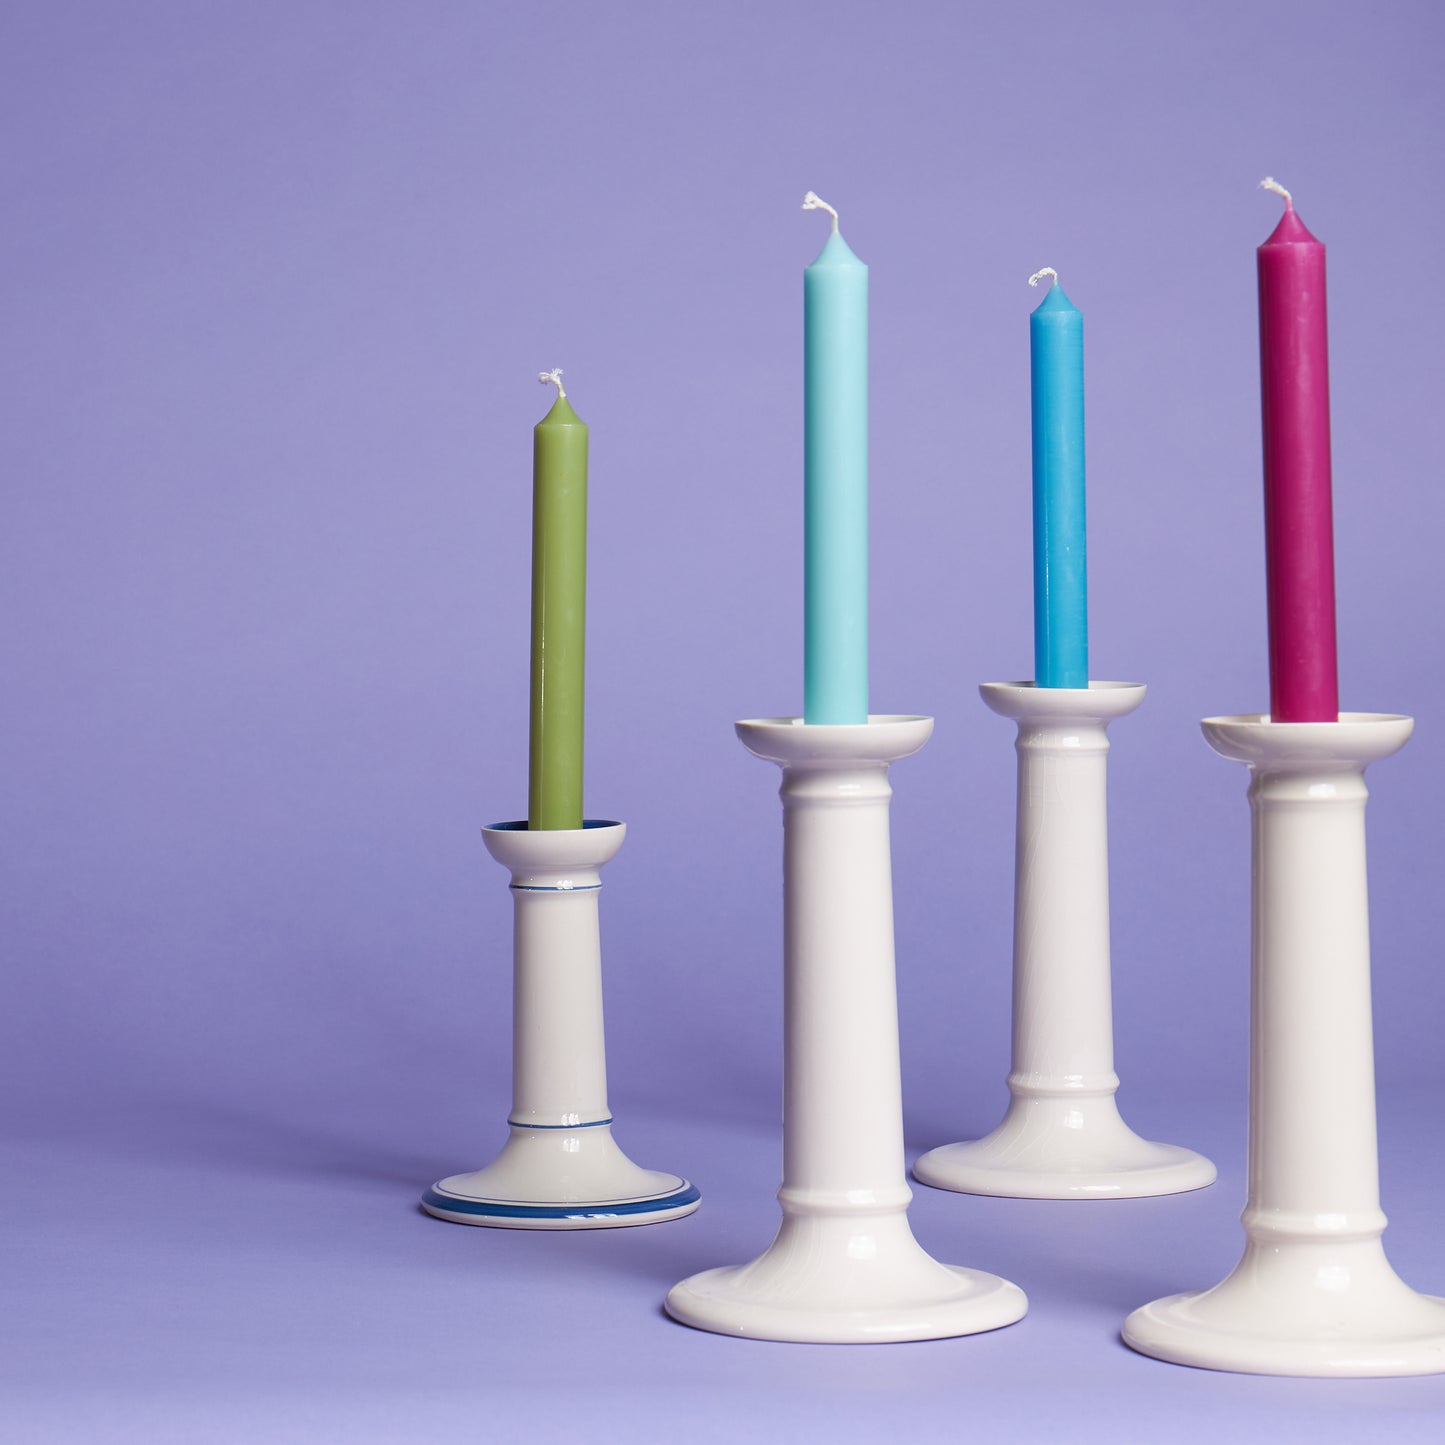 Creamware Column Candlestick - Large